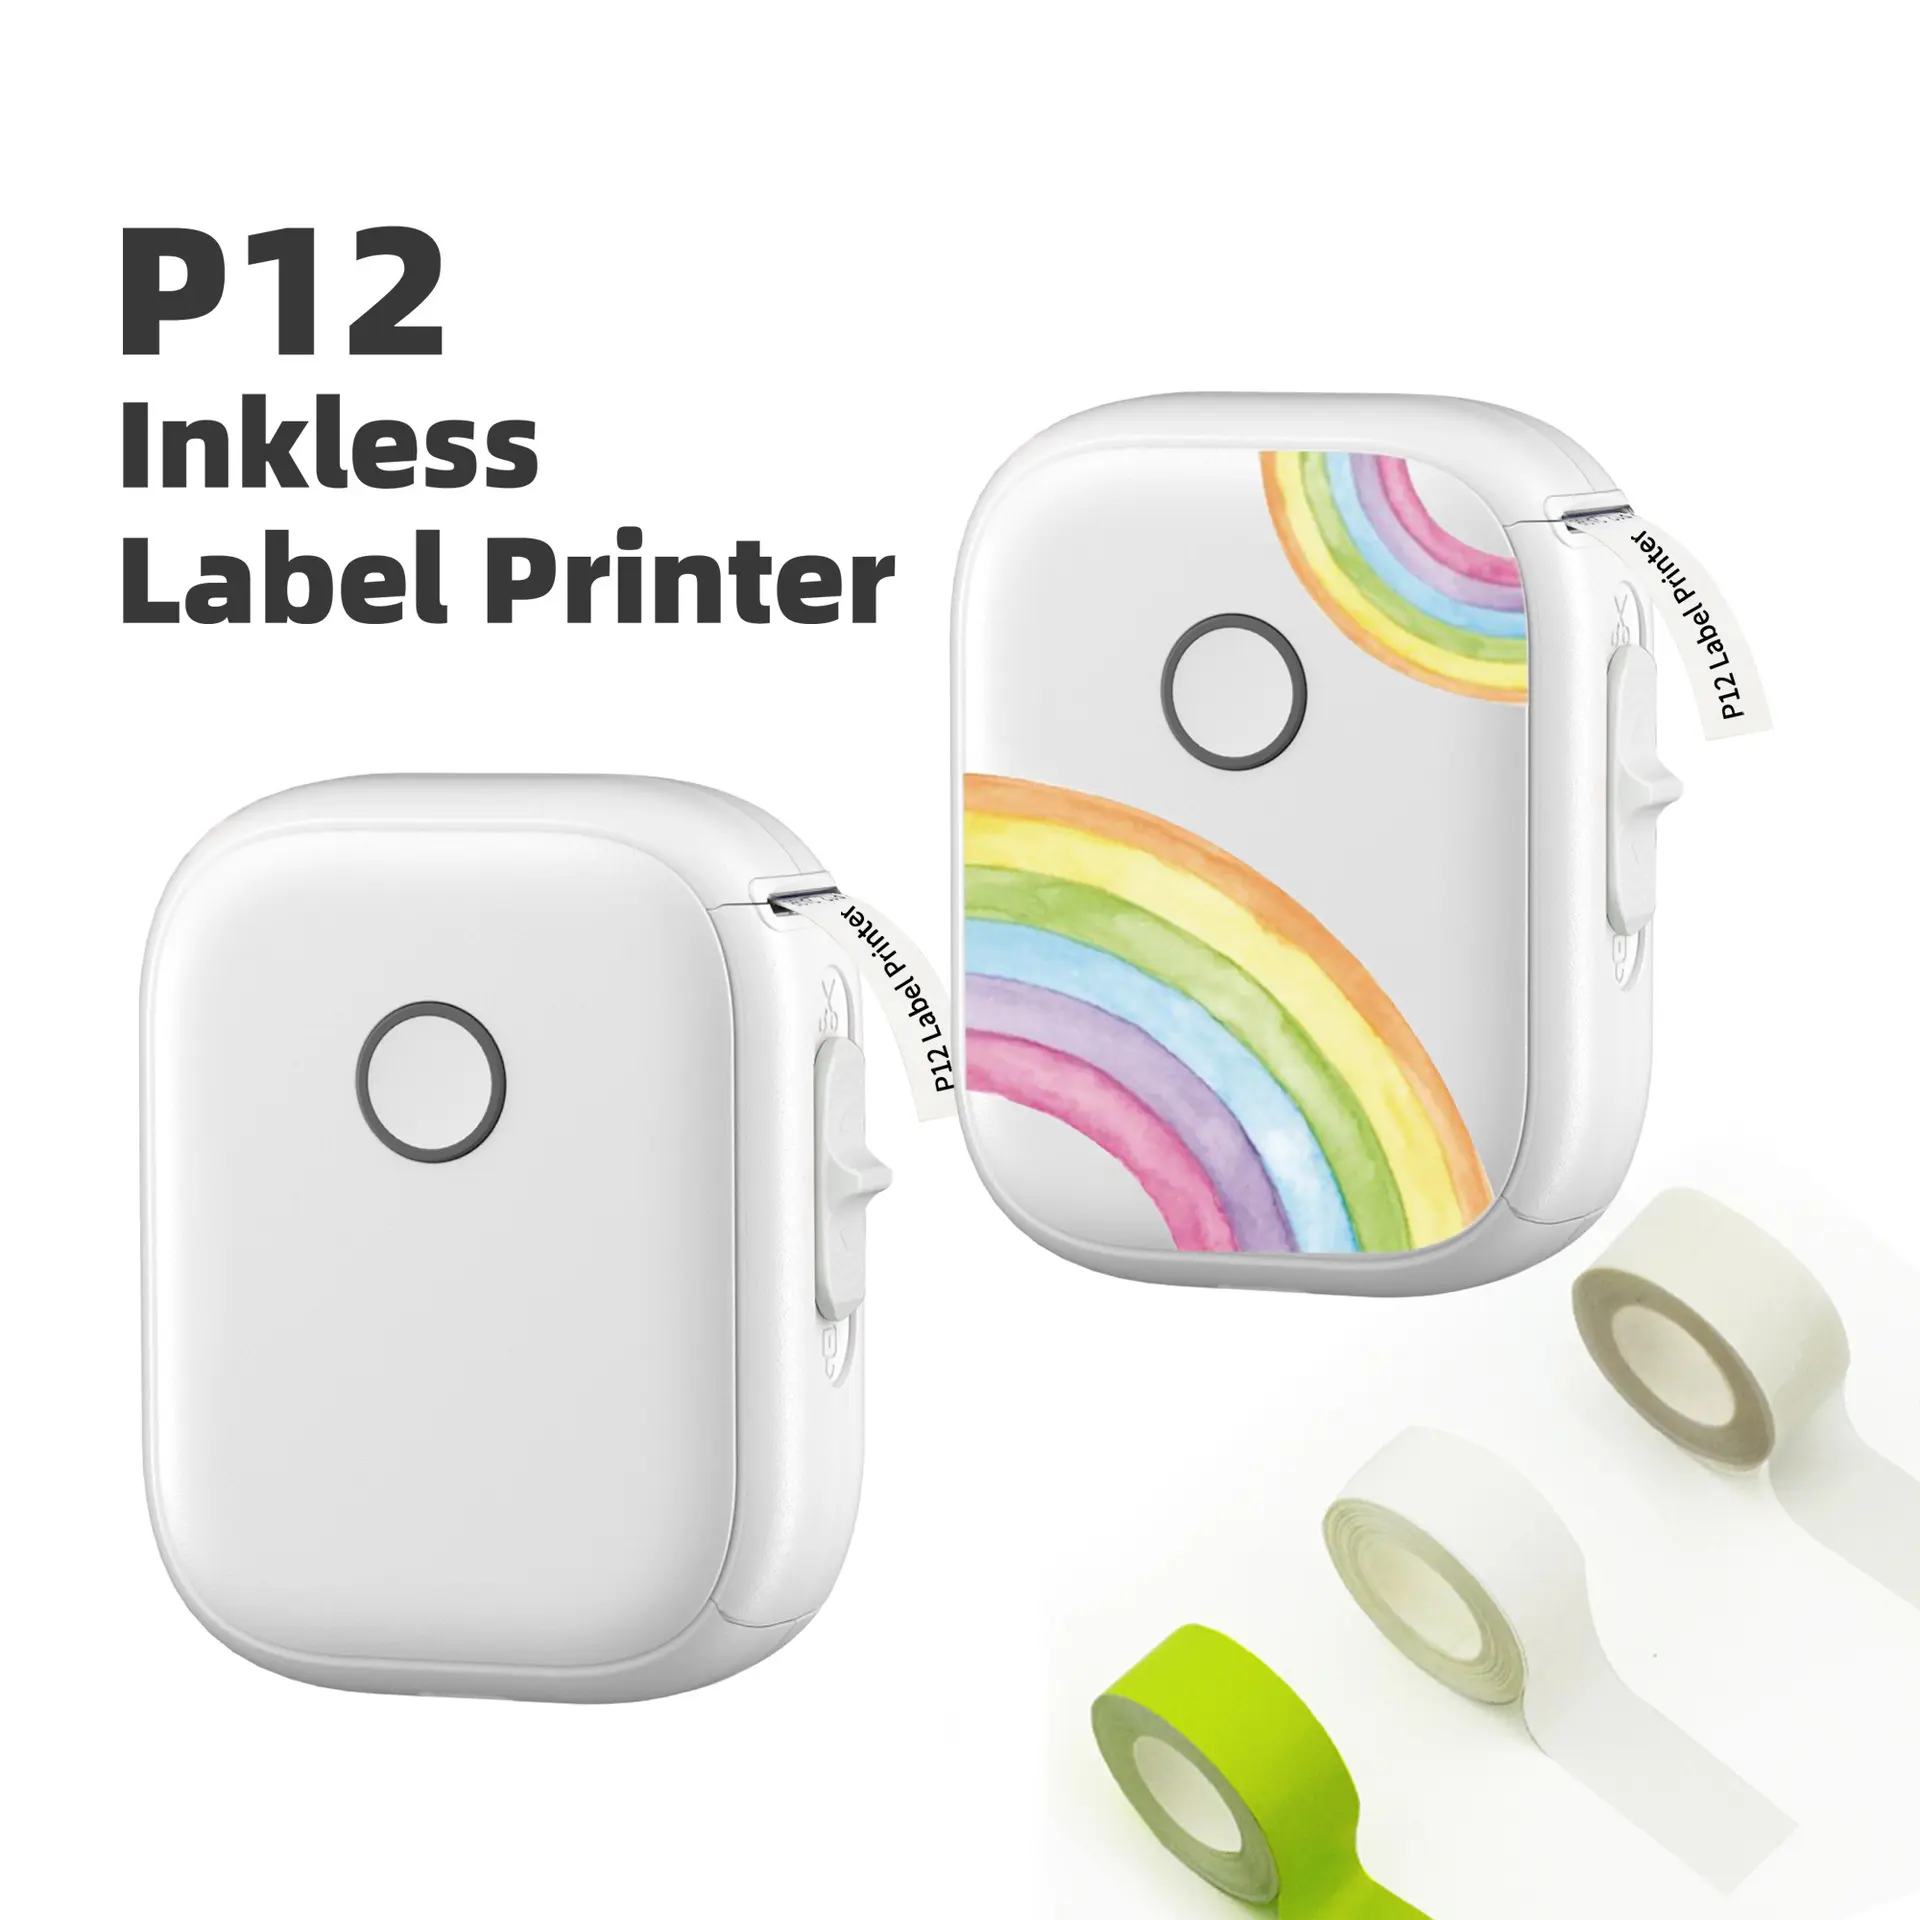 Mini P12 Etiqueta Inkless Impressora Marklife Térmica Barcode Maker mini sem fio conectado inteligente cor transferência térmica etiqueta impressora